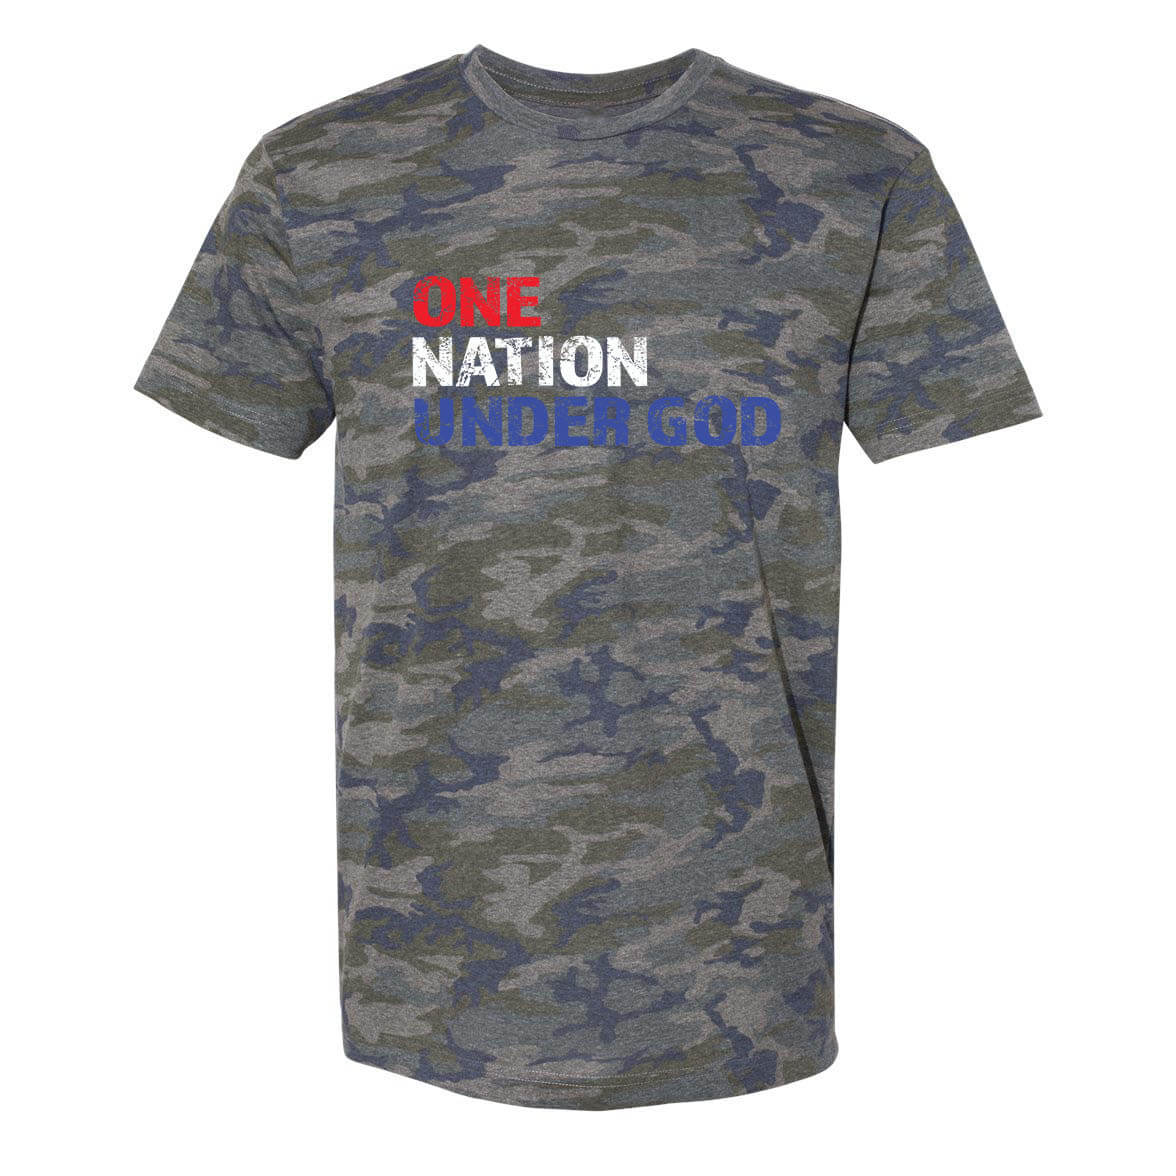 One Nation Under God Men's Camo T-Shirt